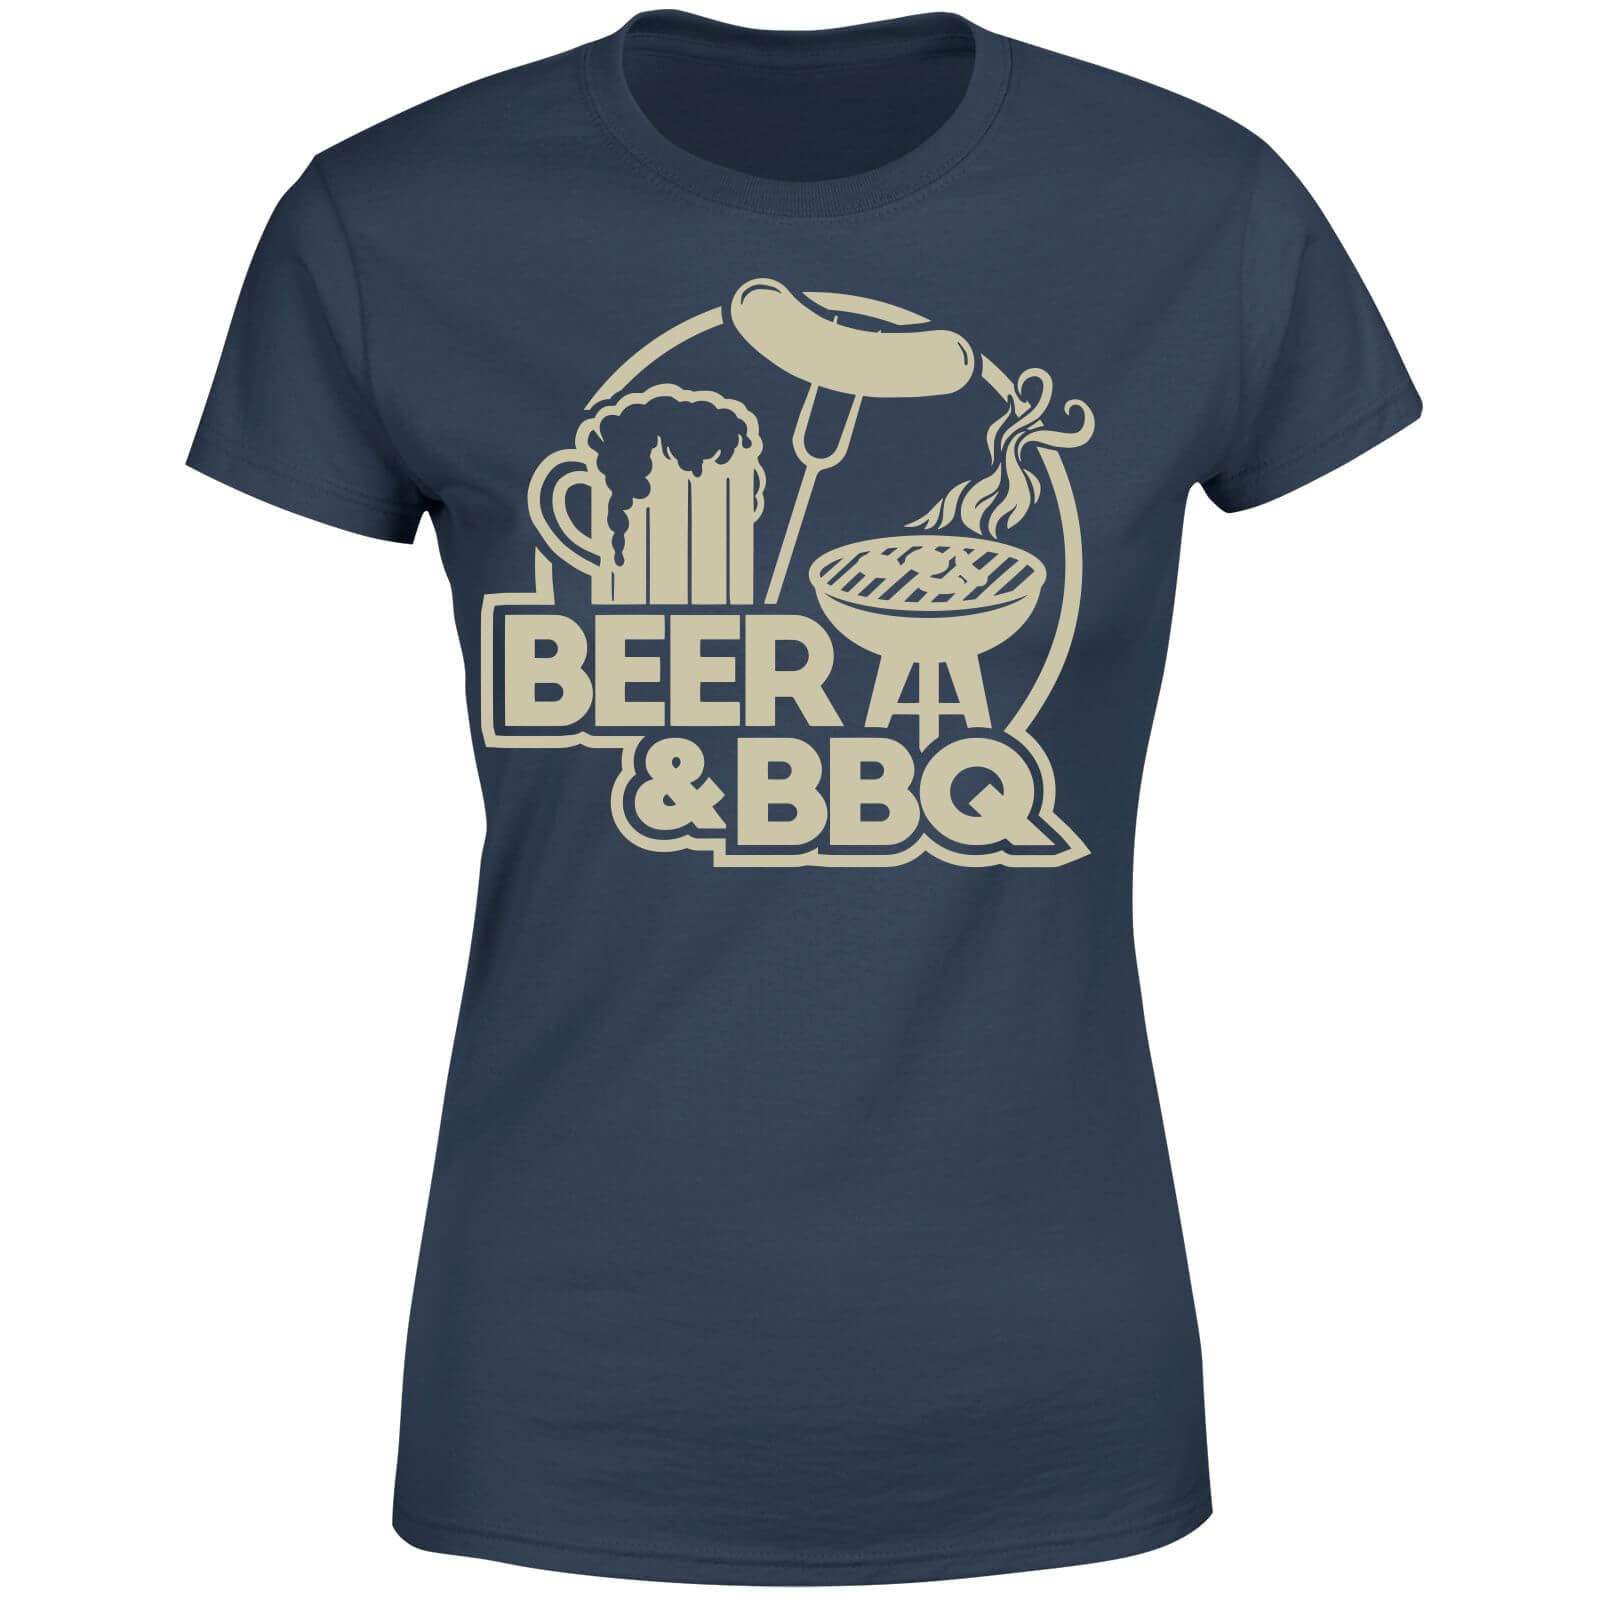 Beer & BBQ Women's T-Shirt - Navy - XL - Navy